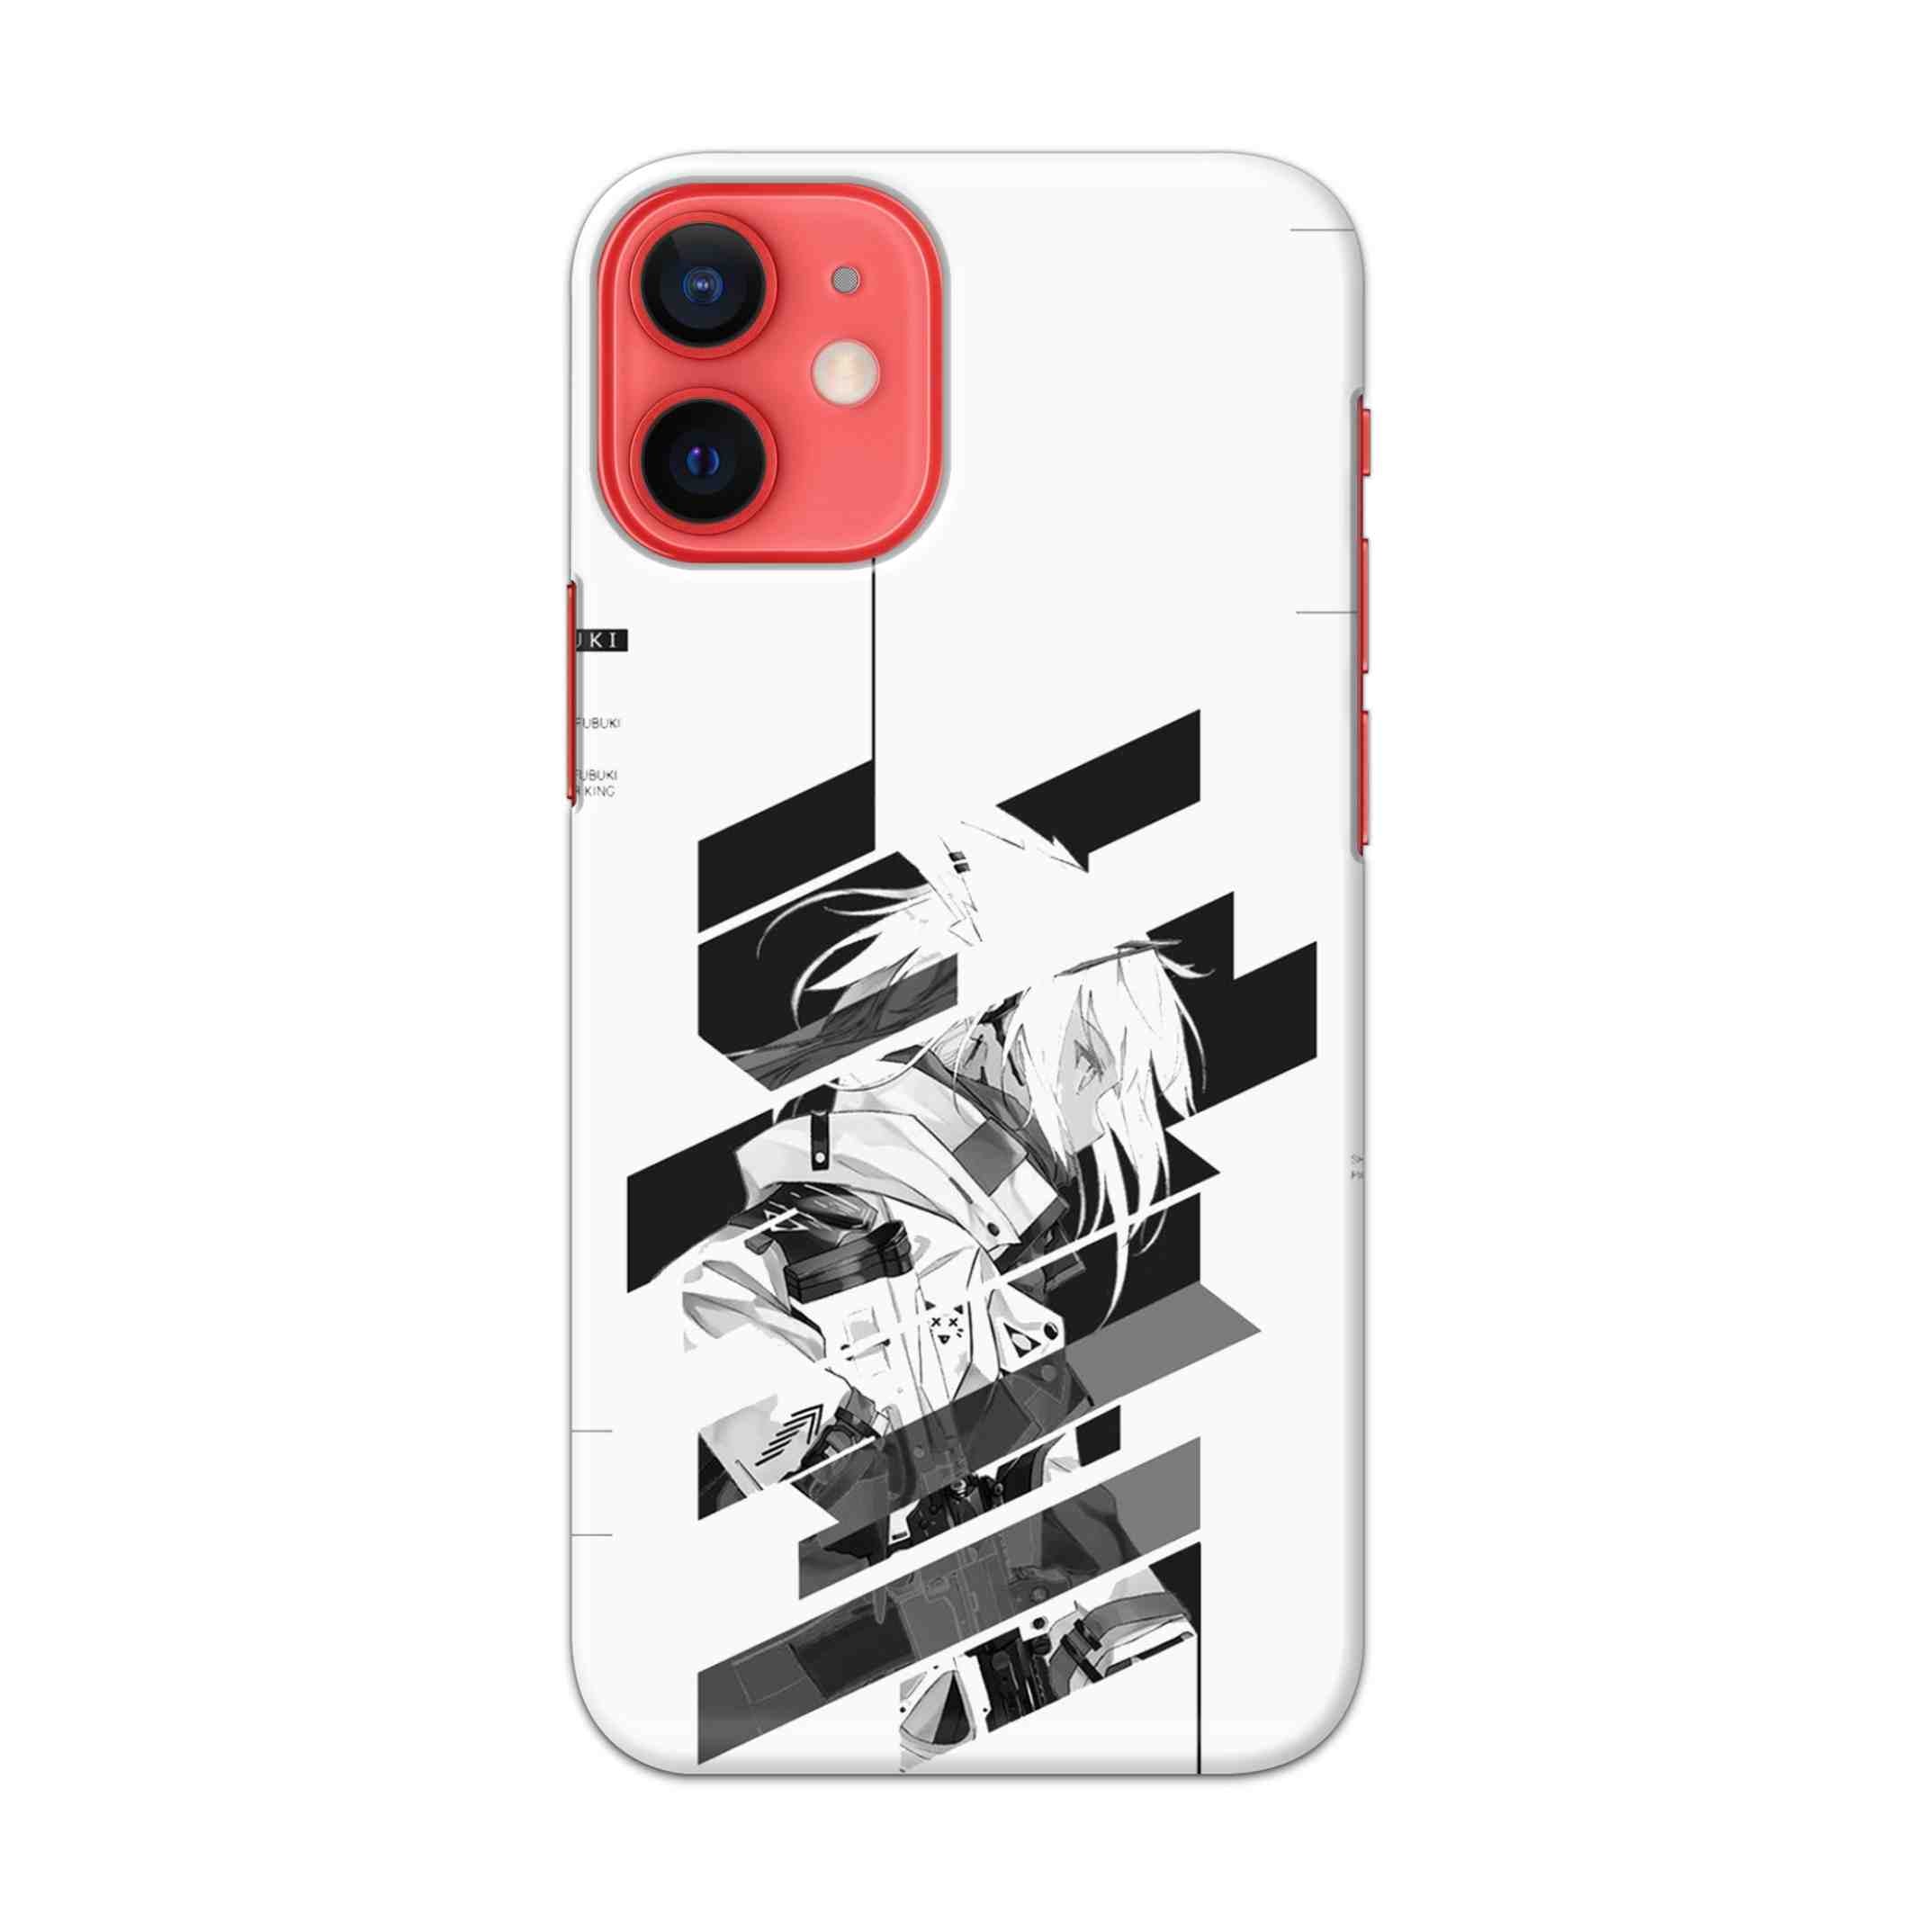 Buy Fubuki Hard Back Mobile Phone Case/Cover For Apple iPhone 12 mini Online